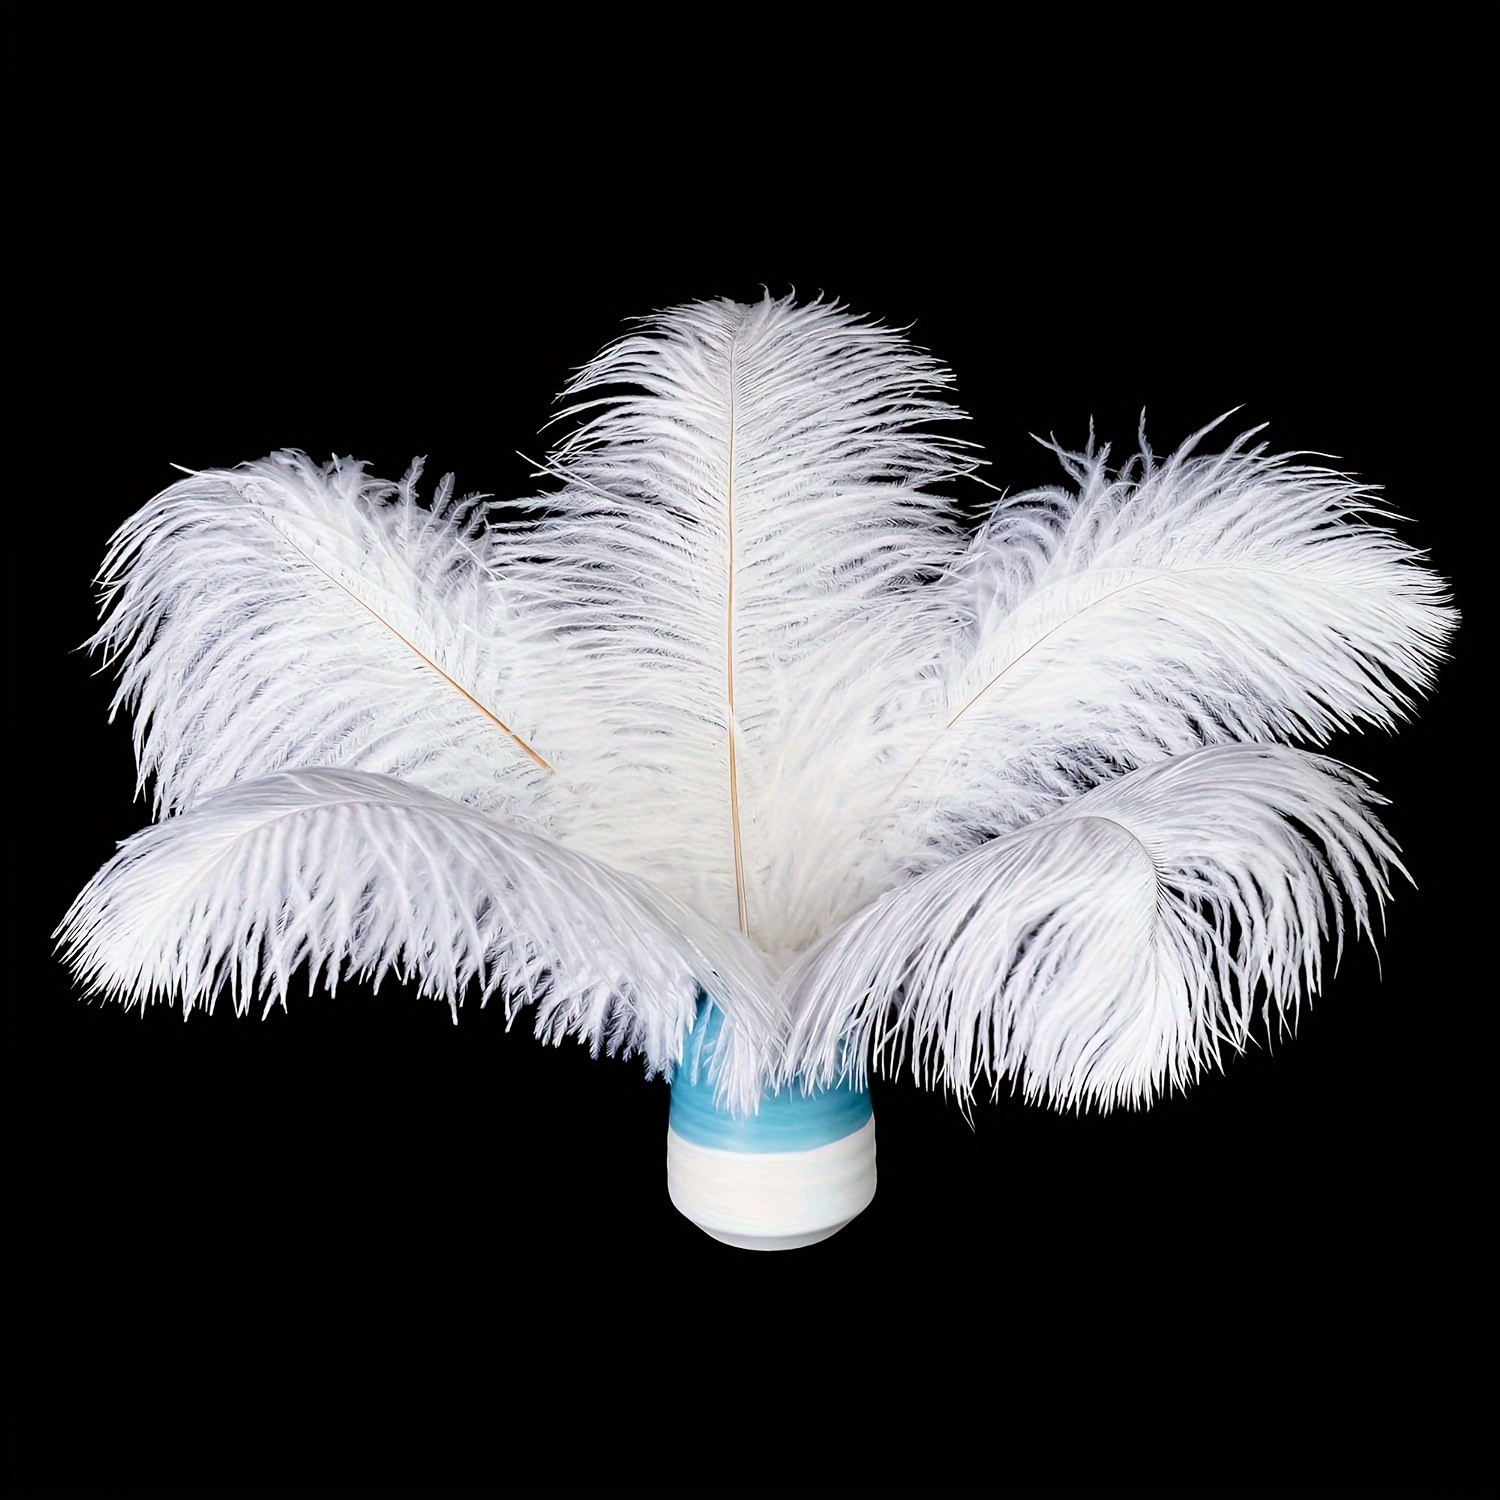 Blush Pink Ostrich Feathers Wholesale BULK Wedding Centerpieces